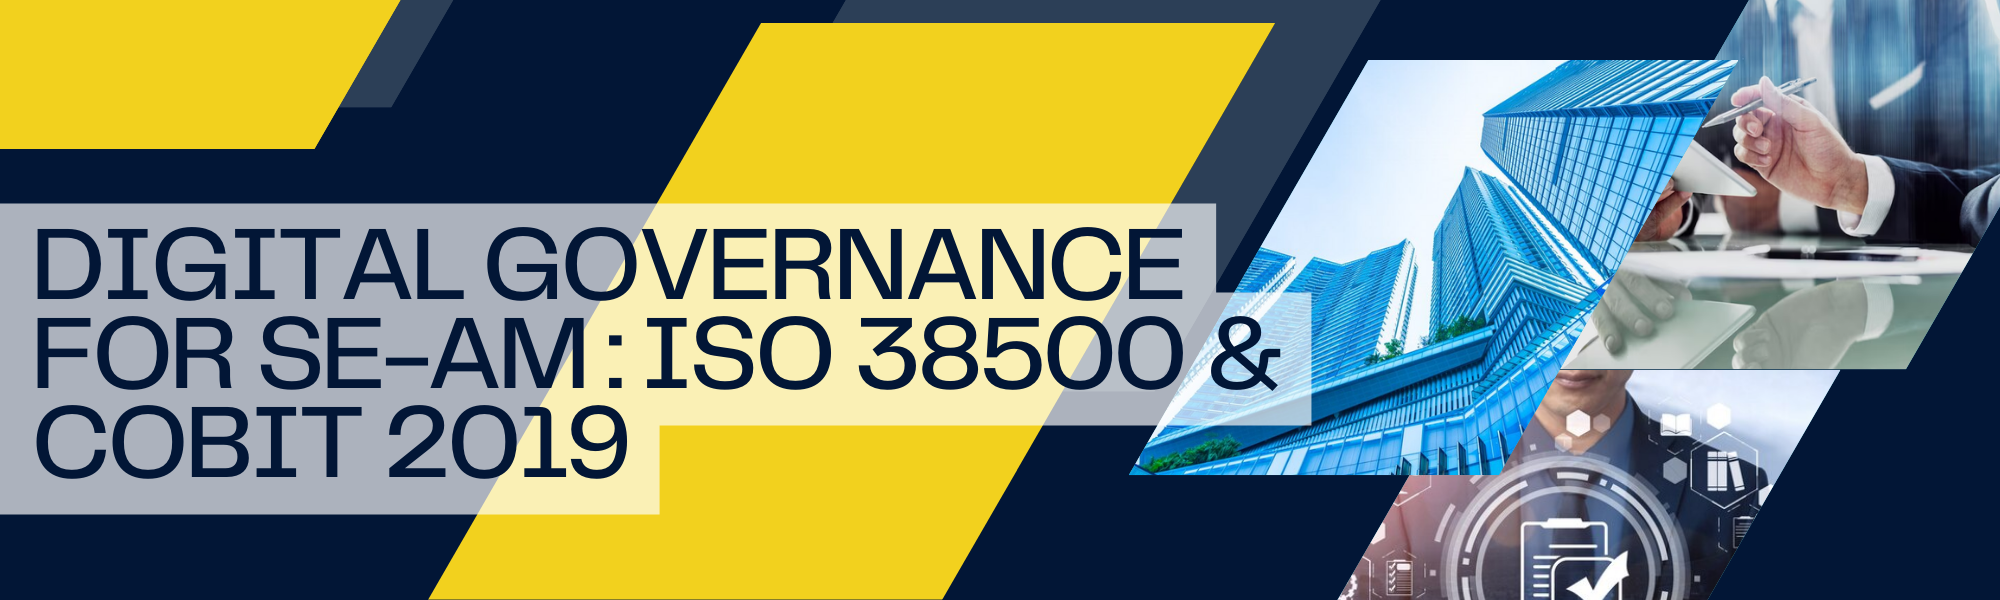 Digital Governance for SE-AM : ISO 38500 & COBIT 2019 (New!!)